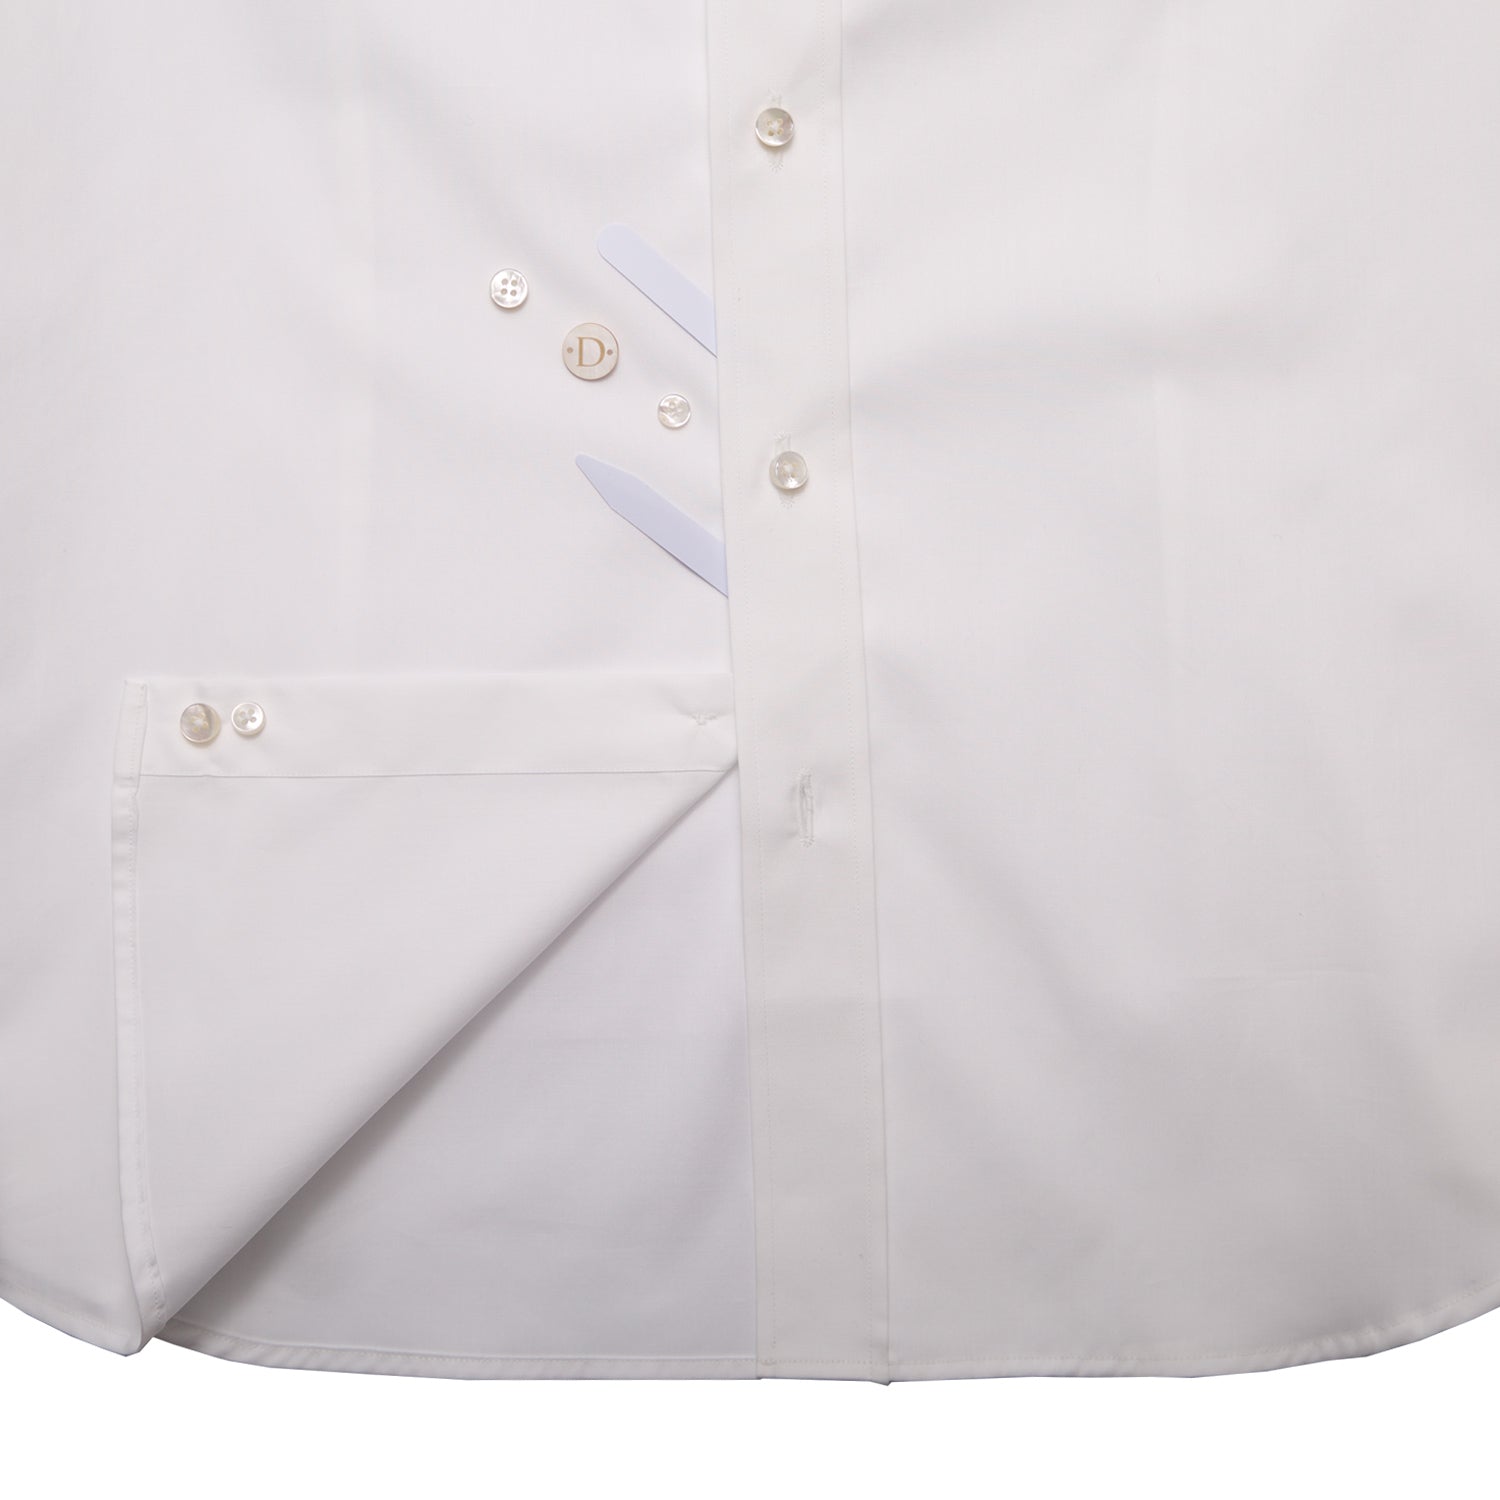 DARIO’S Couture Men’s Shirt Lübeck Mixed Cuff 140/2 in White